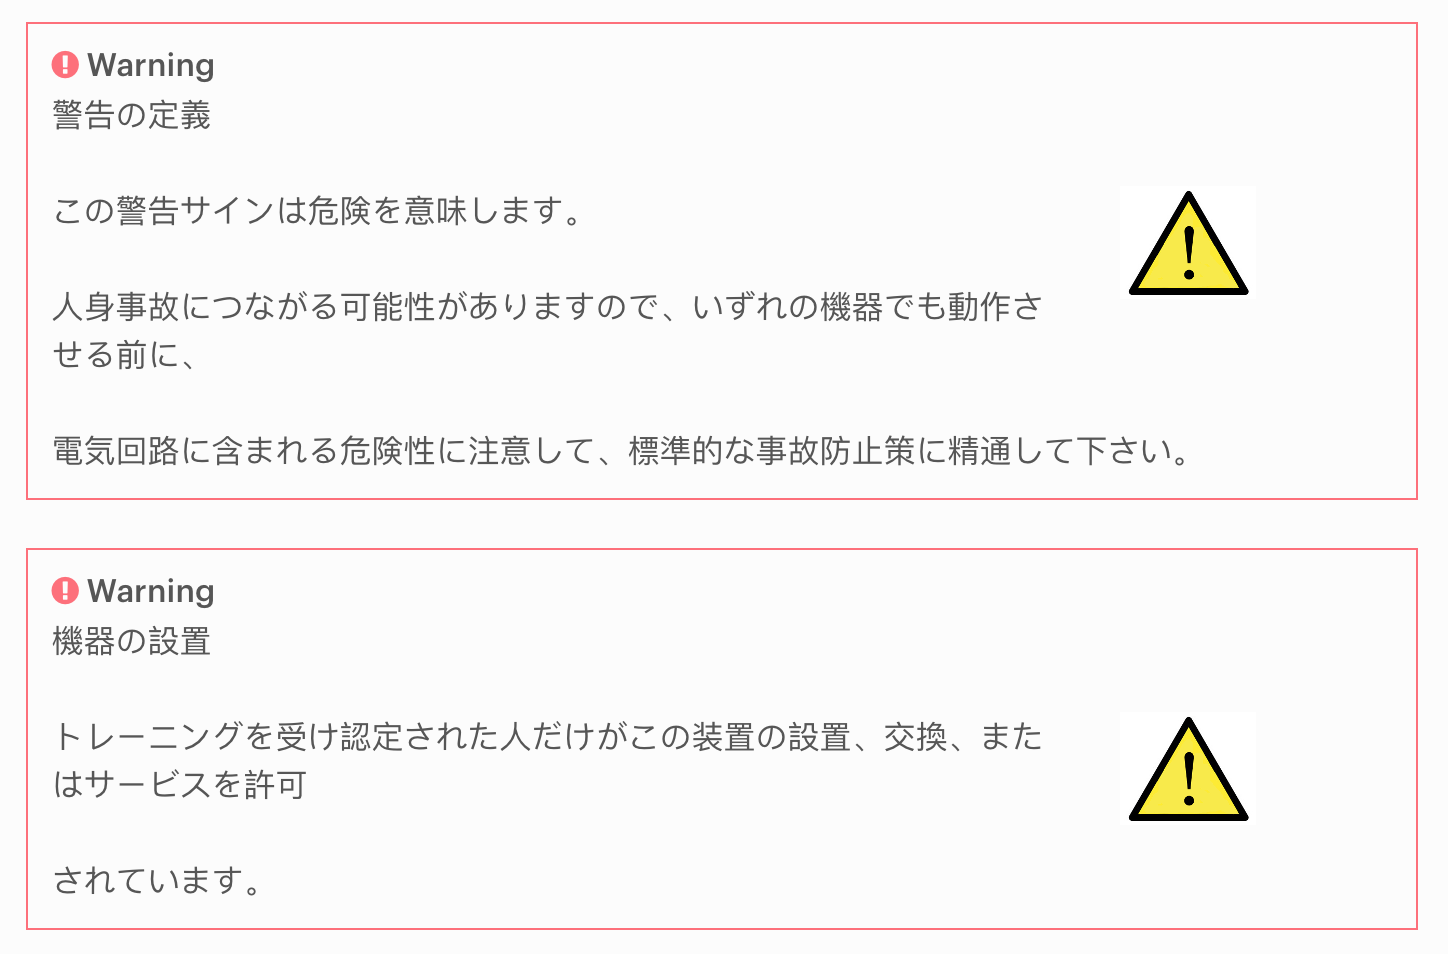 _images/japan-warnings-1.png